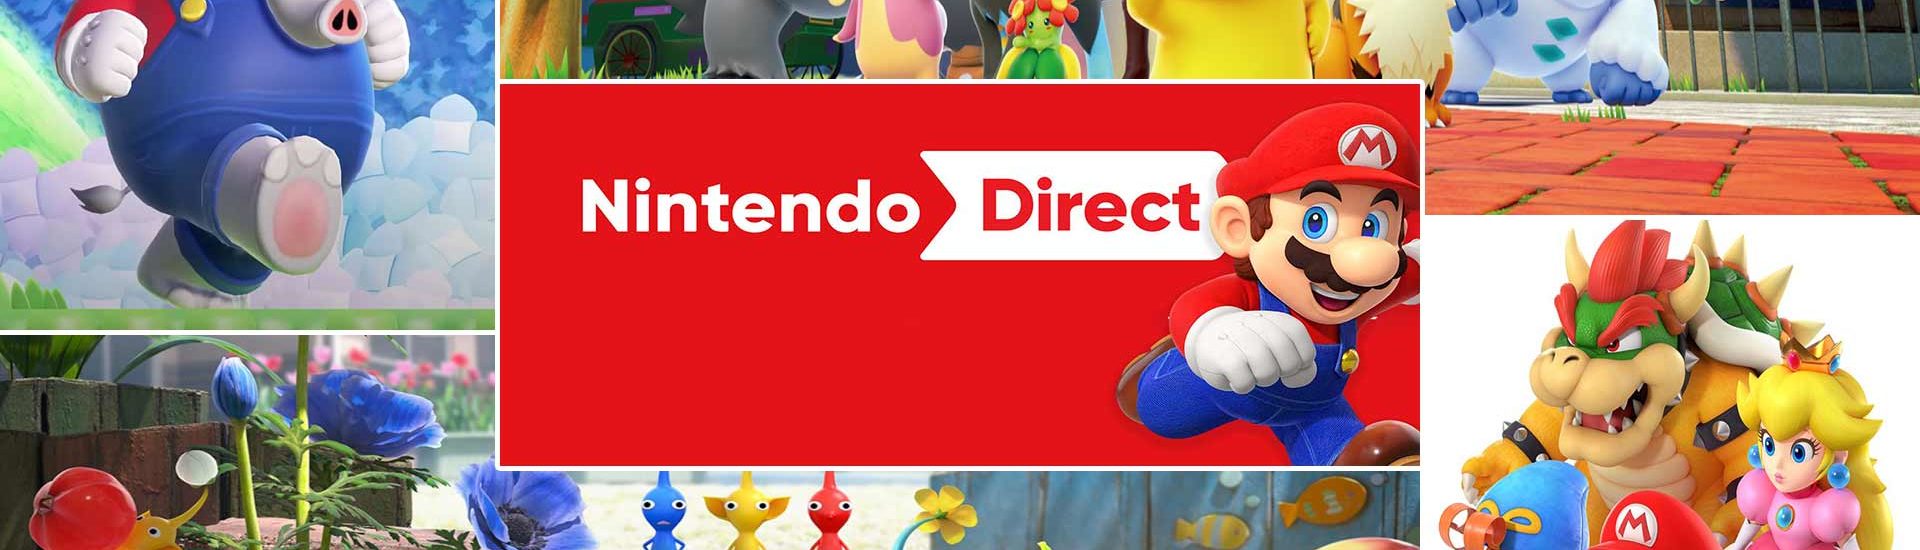 Nintendo Direct: Benjamin Blümchen meets Super Mario